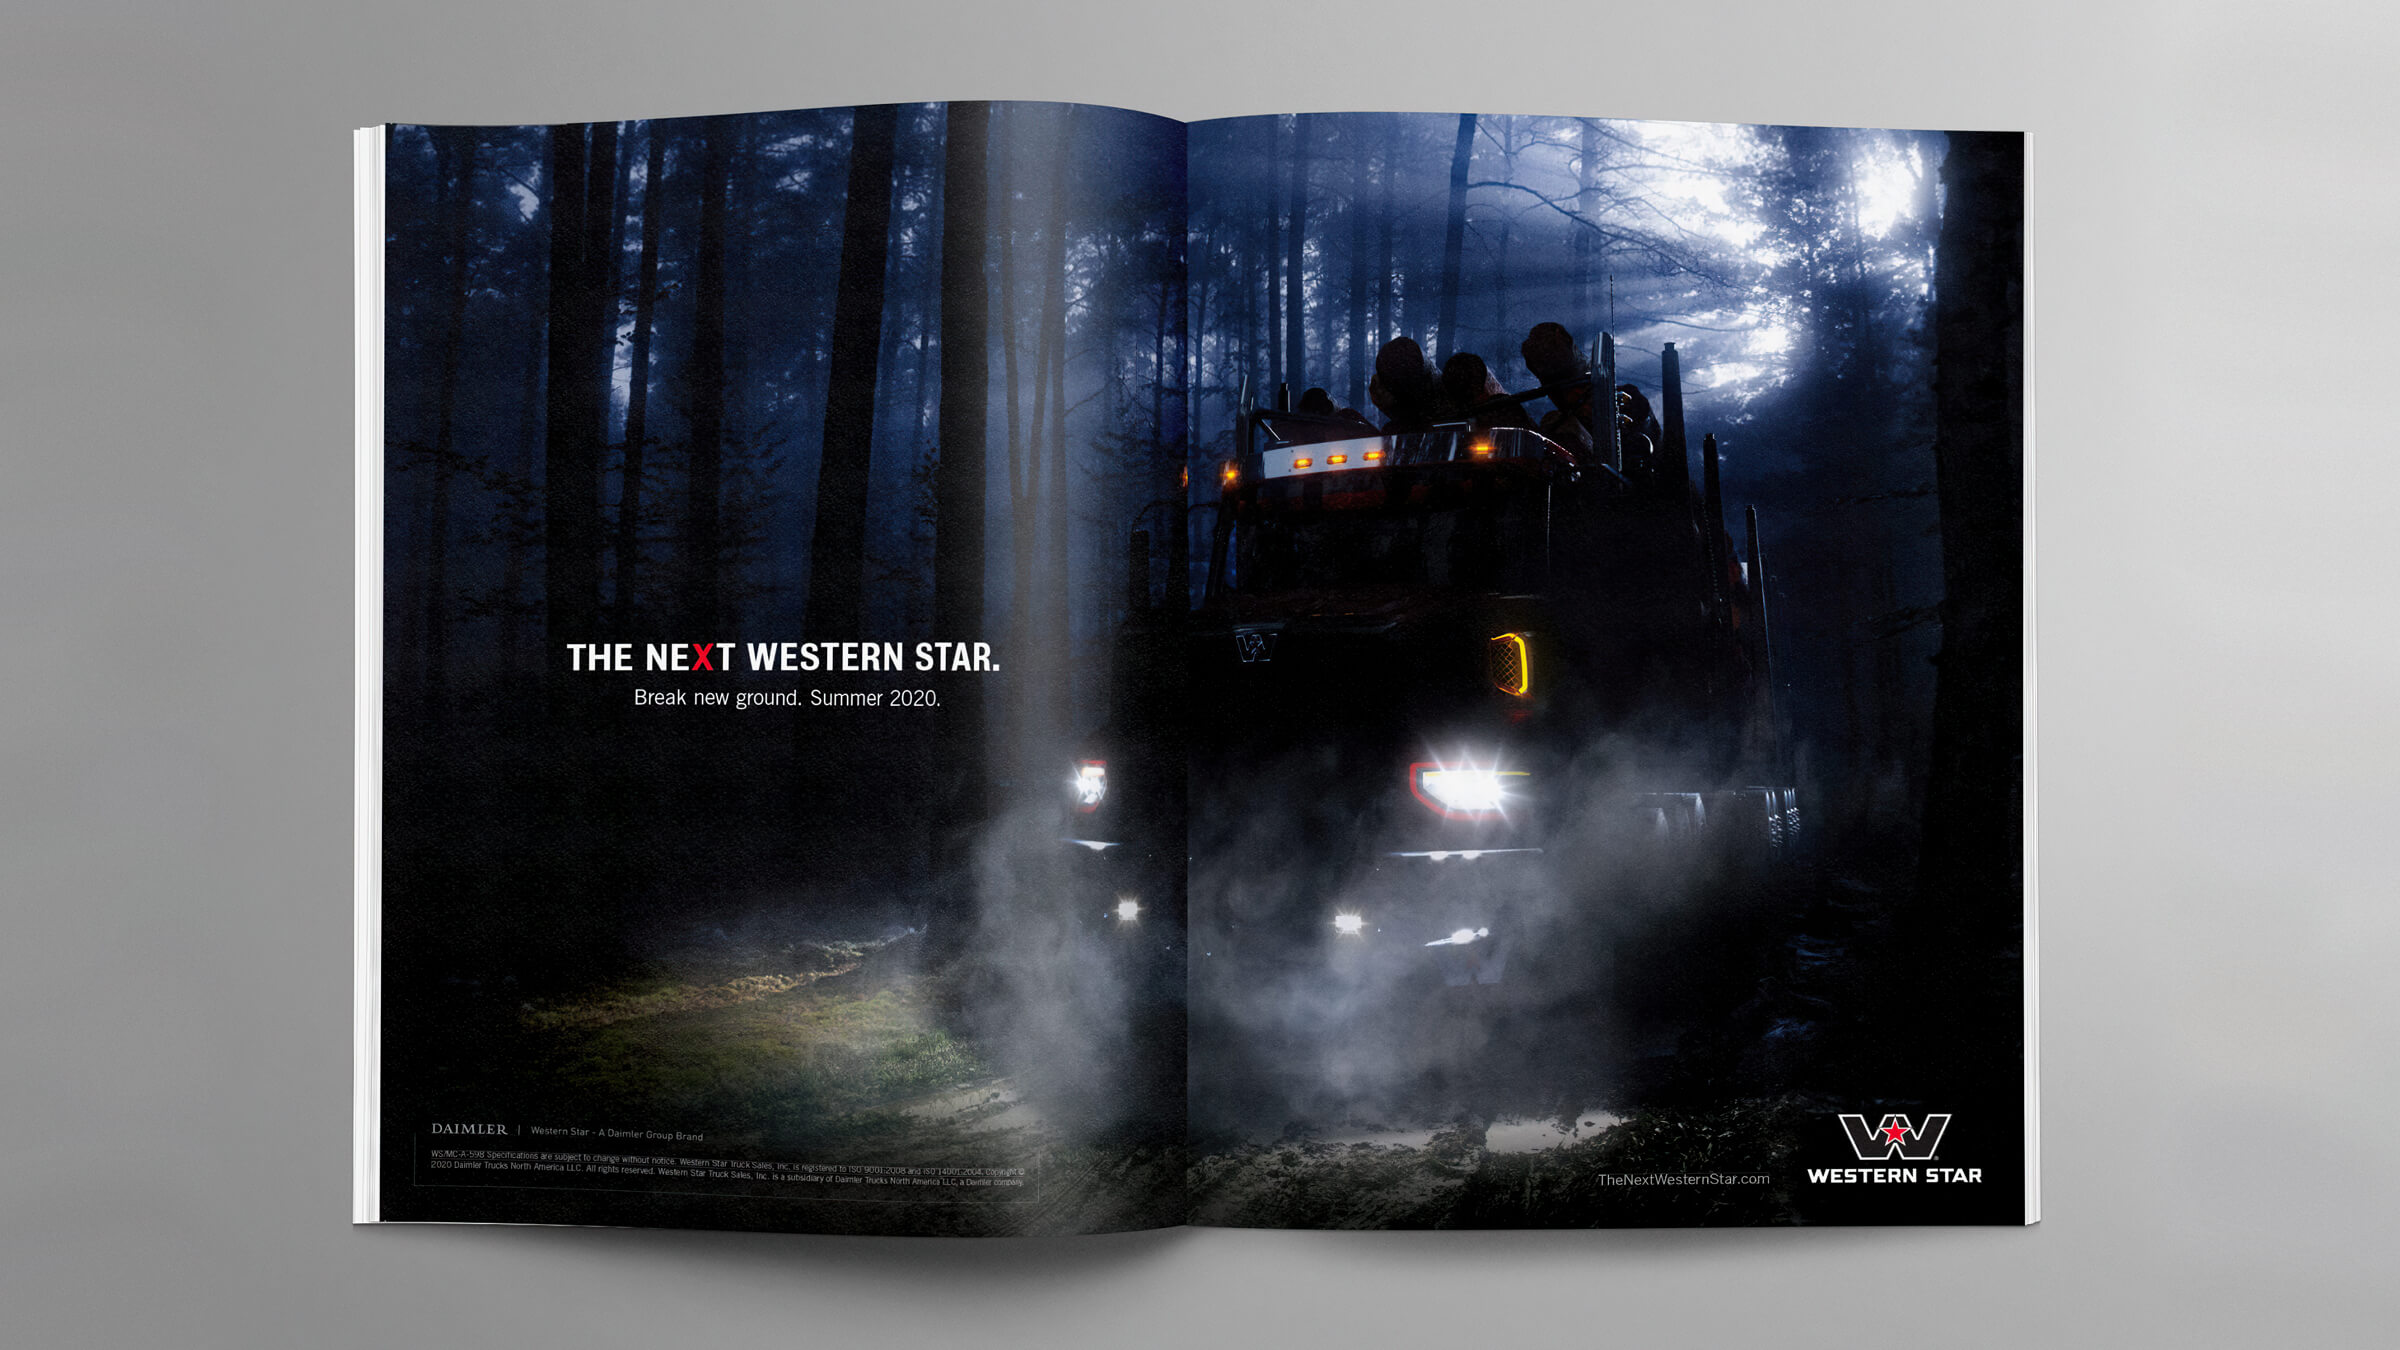 Western Star Trucks 49x launch magazine spread